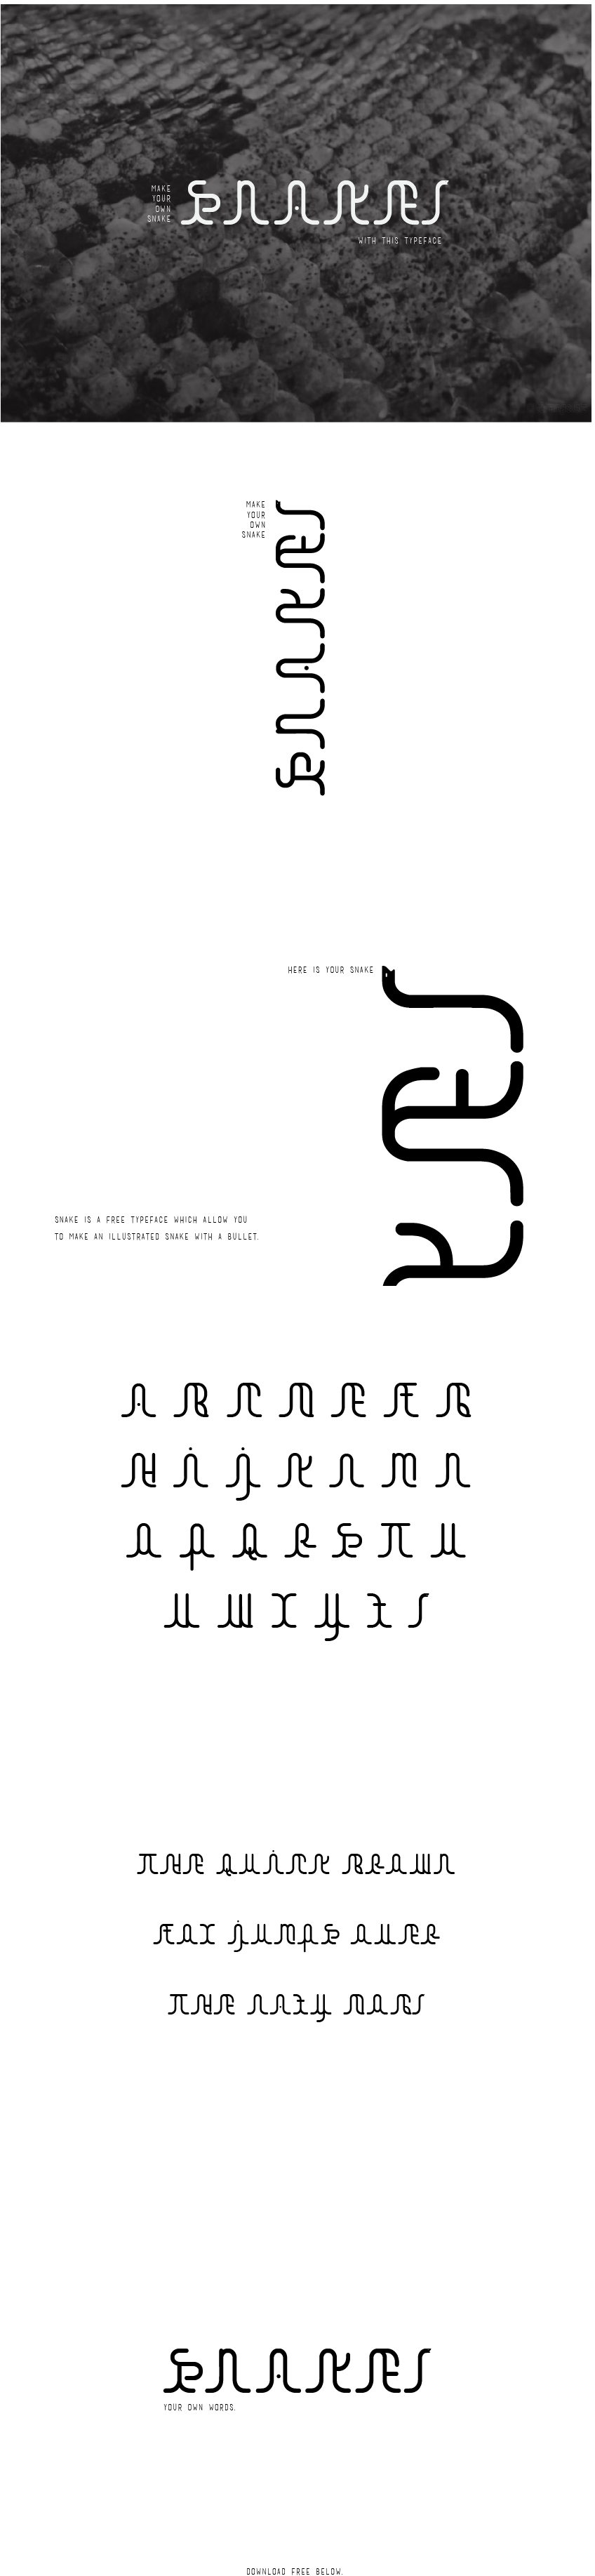 font Free font snake ivan ivan harsanto indonesia Typeface lettering type Behance